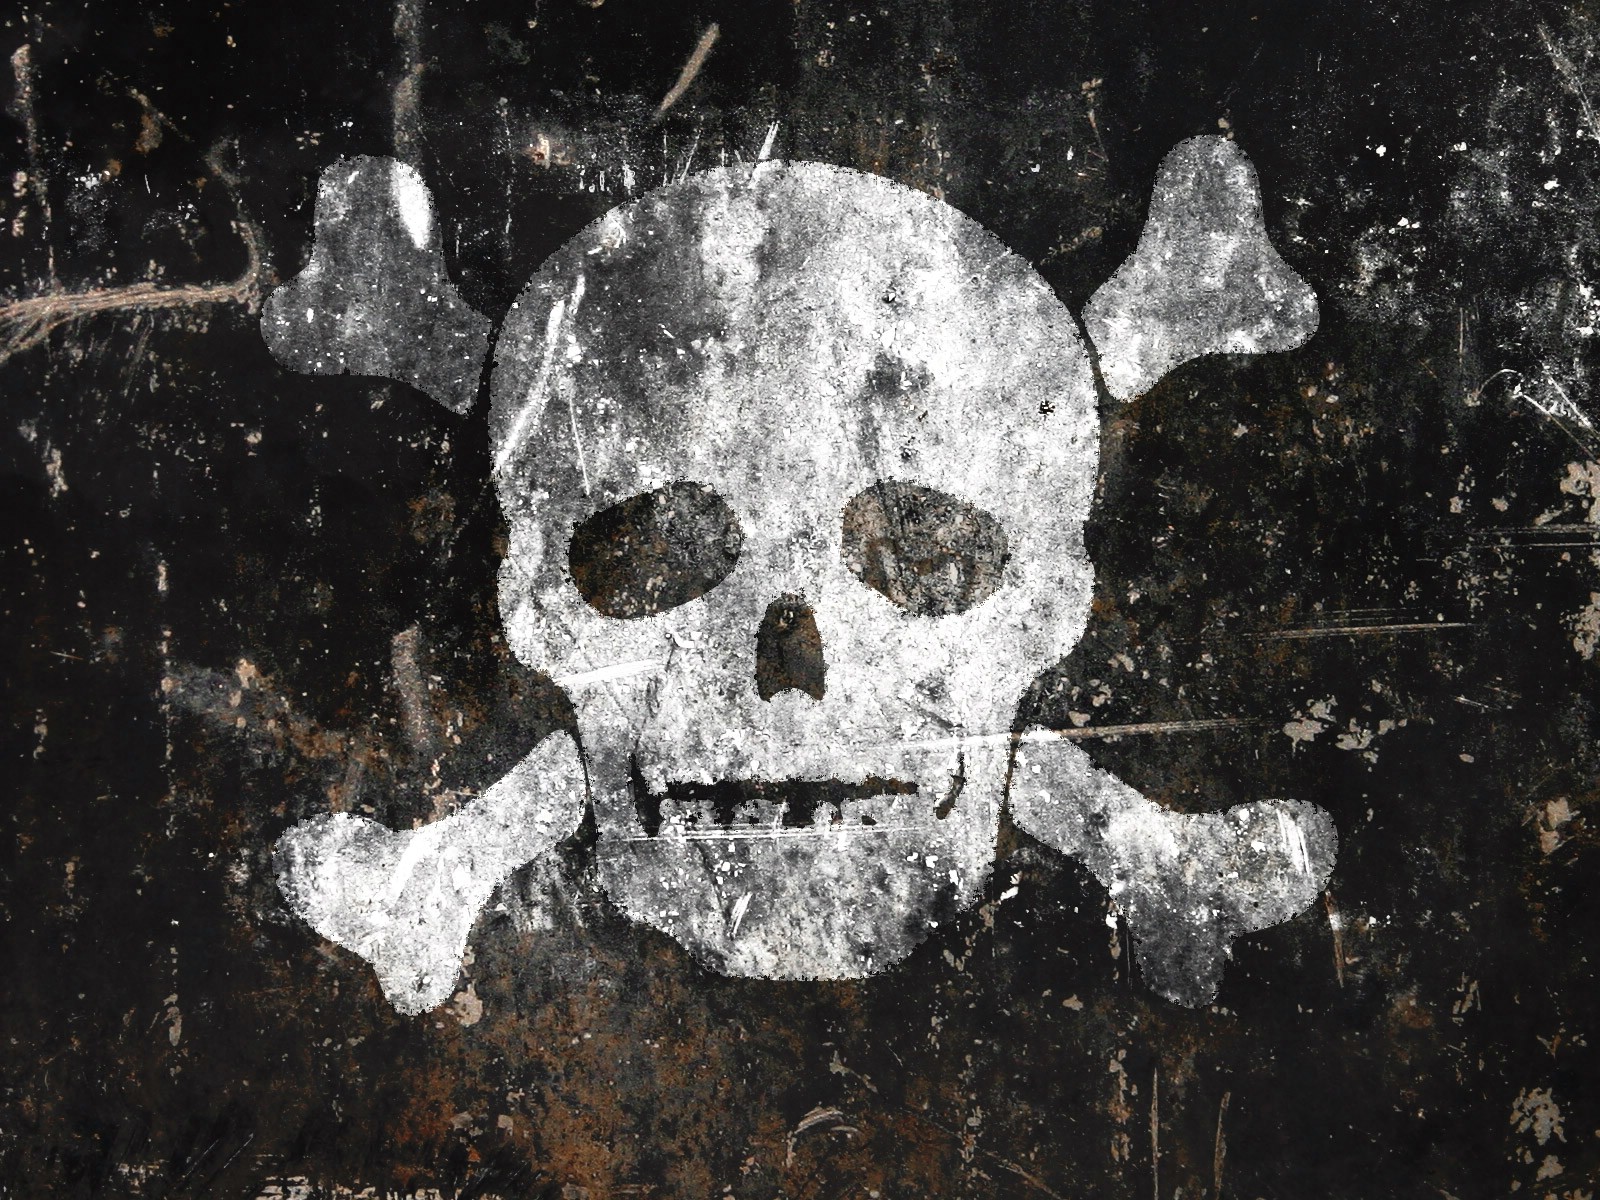 https://blogger.googleusercontent.com/img/b/R29vZ2xl/AVvXsEhwz4Zx9jBhnl_wbAbLrTD8-0Pags4igKLcPIjndawKjddYXLQYq0nbAk8fgOnEcWbxYk5TwEmFW75abWkSYhiExFjxj2xGUOJ7Fg9PZisr7asfOdiiPyYlA65bpxqFsy0ncbfsZJJ2bdhK/s1600/Old+Pirate+Skull+_+Dark-Wallpaper.Blogspot.Com.jpg